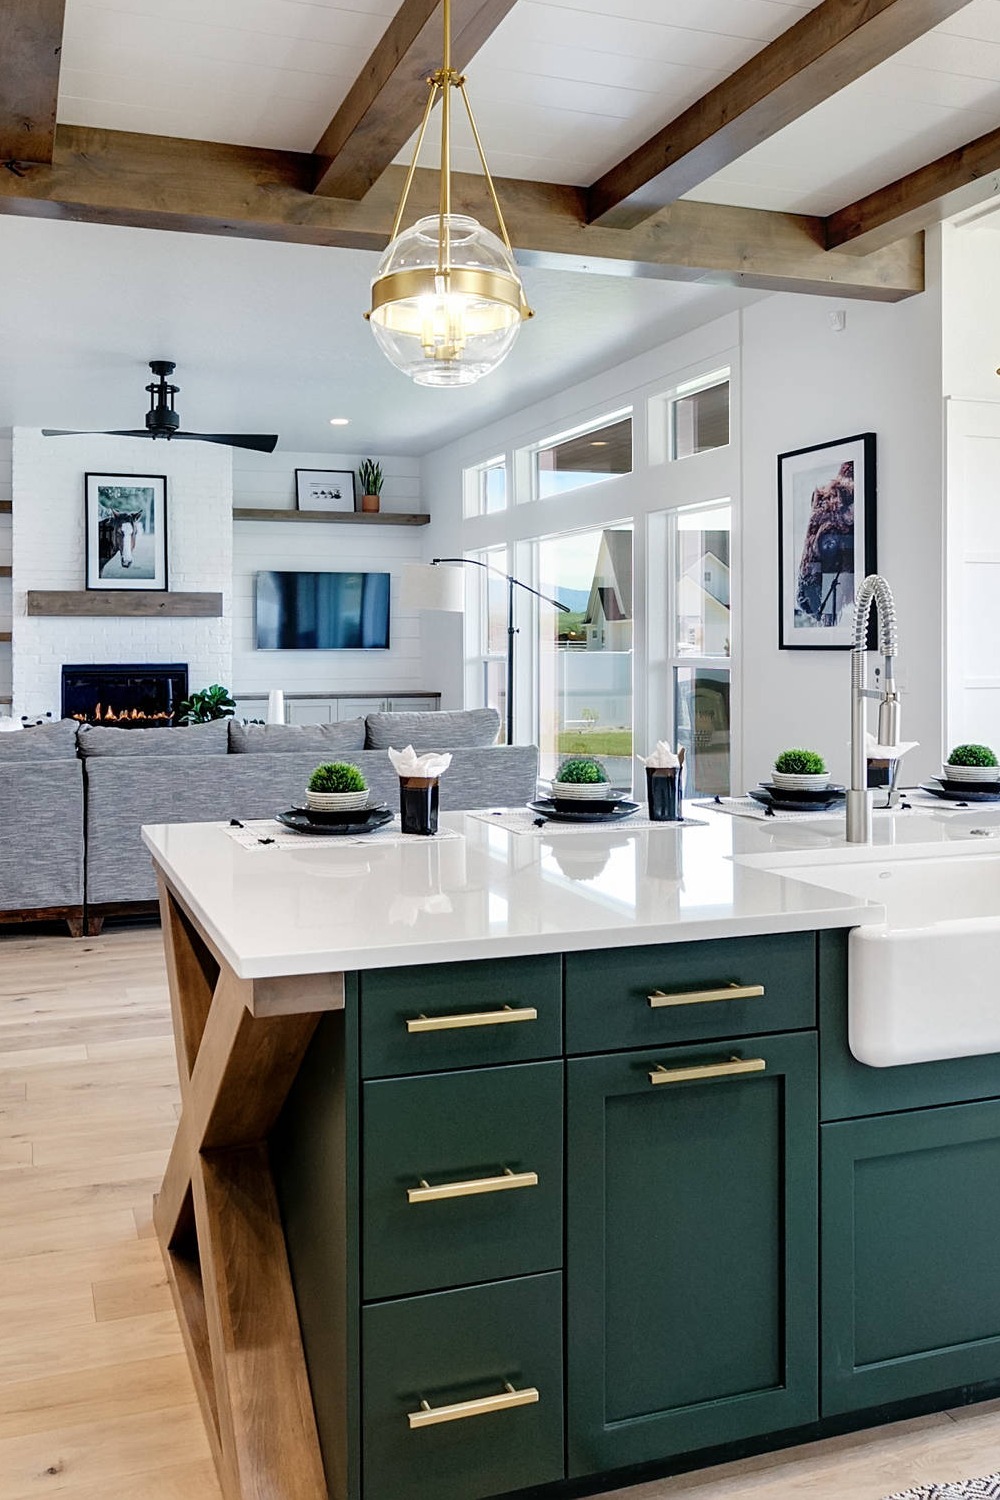 Light Wood Floor Shaker Green Cabinets White Quartz Countertops Farmhouse Sink Pendant Light Open Concept